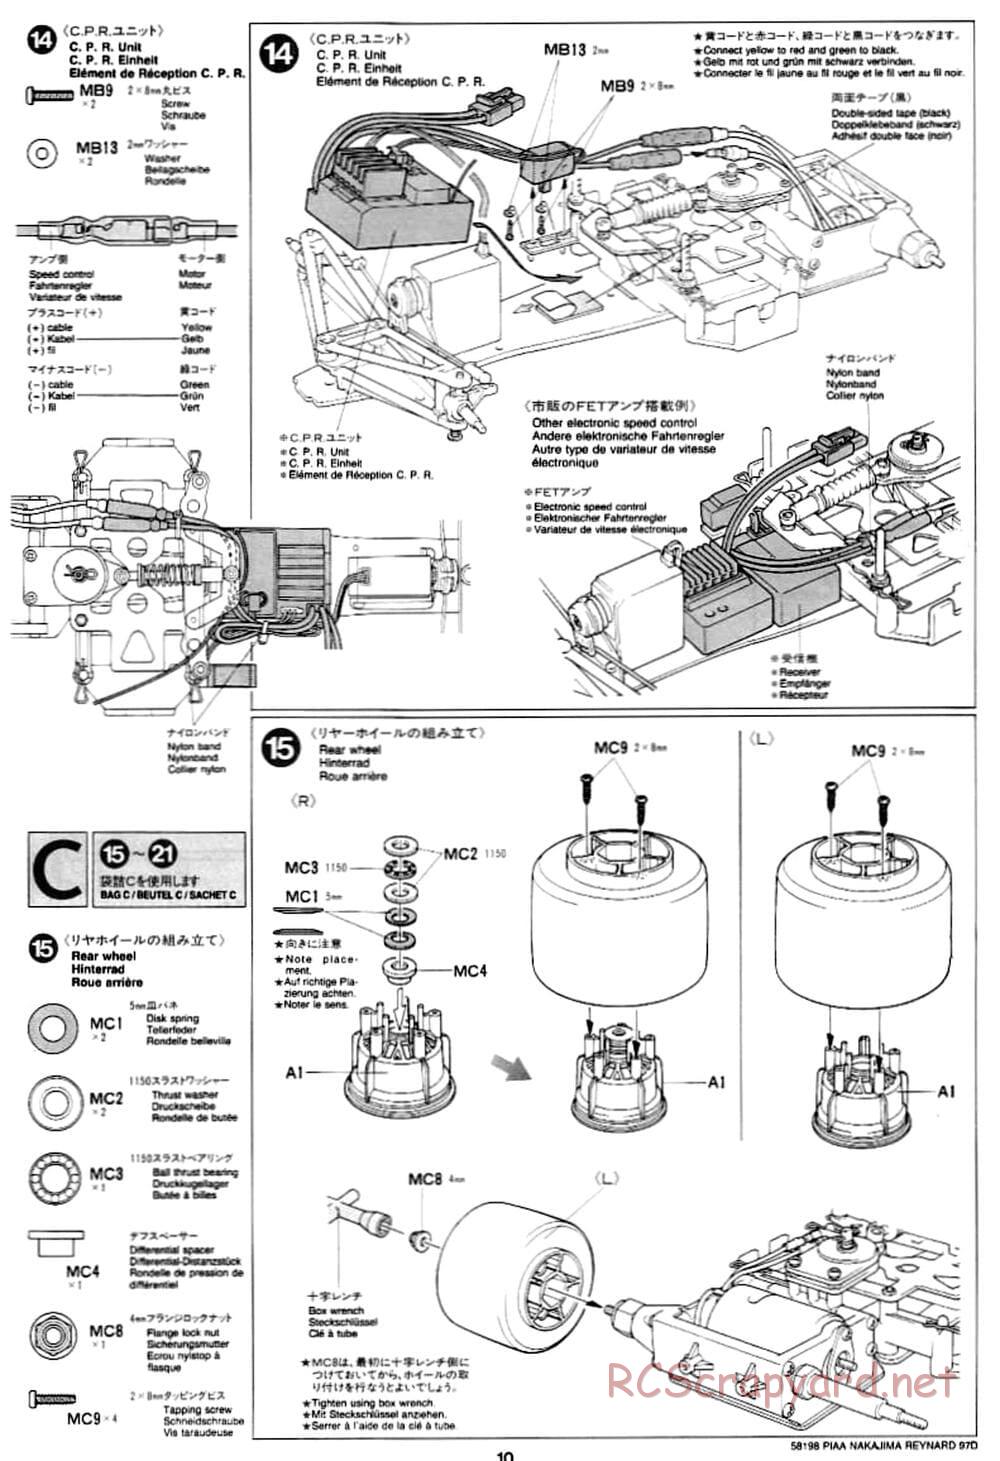 Tamiya - PIAA Nakajima Reynard 97D - F103 Chassis - Manuale - Page 10